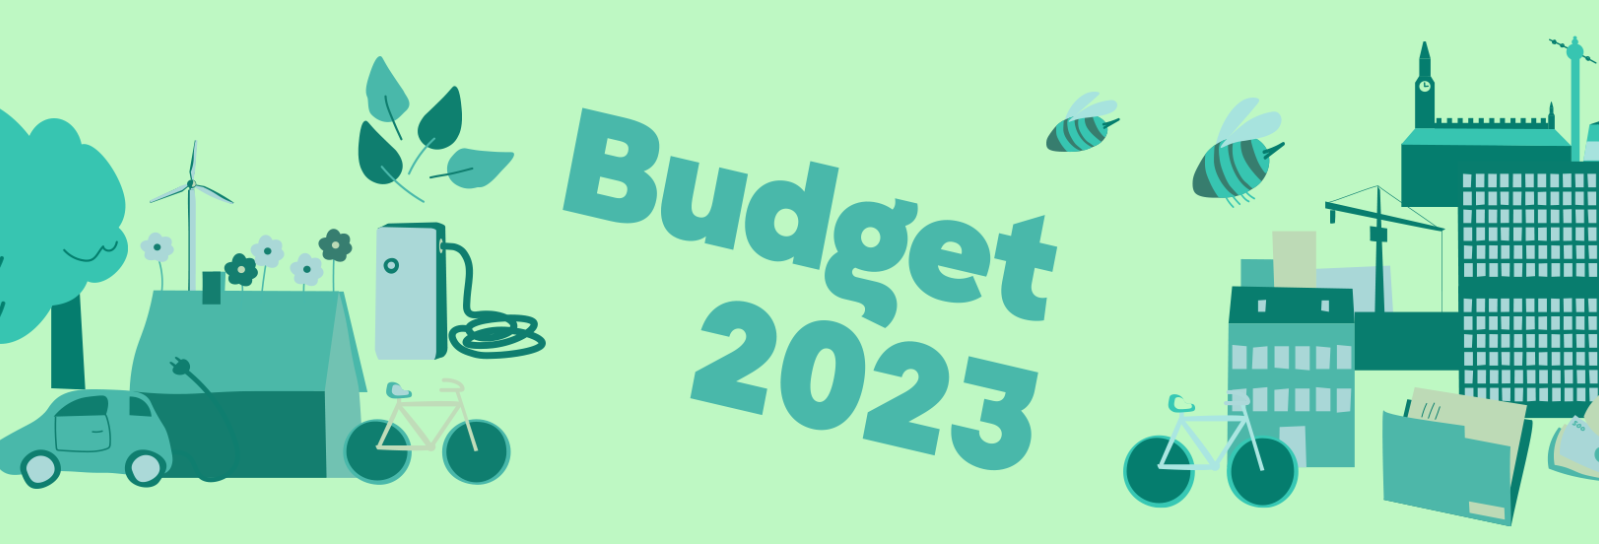 grafik budget 2023